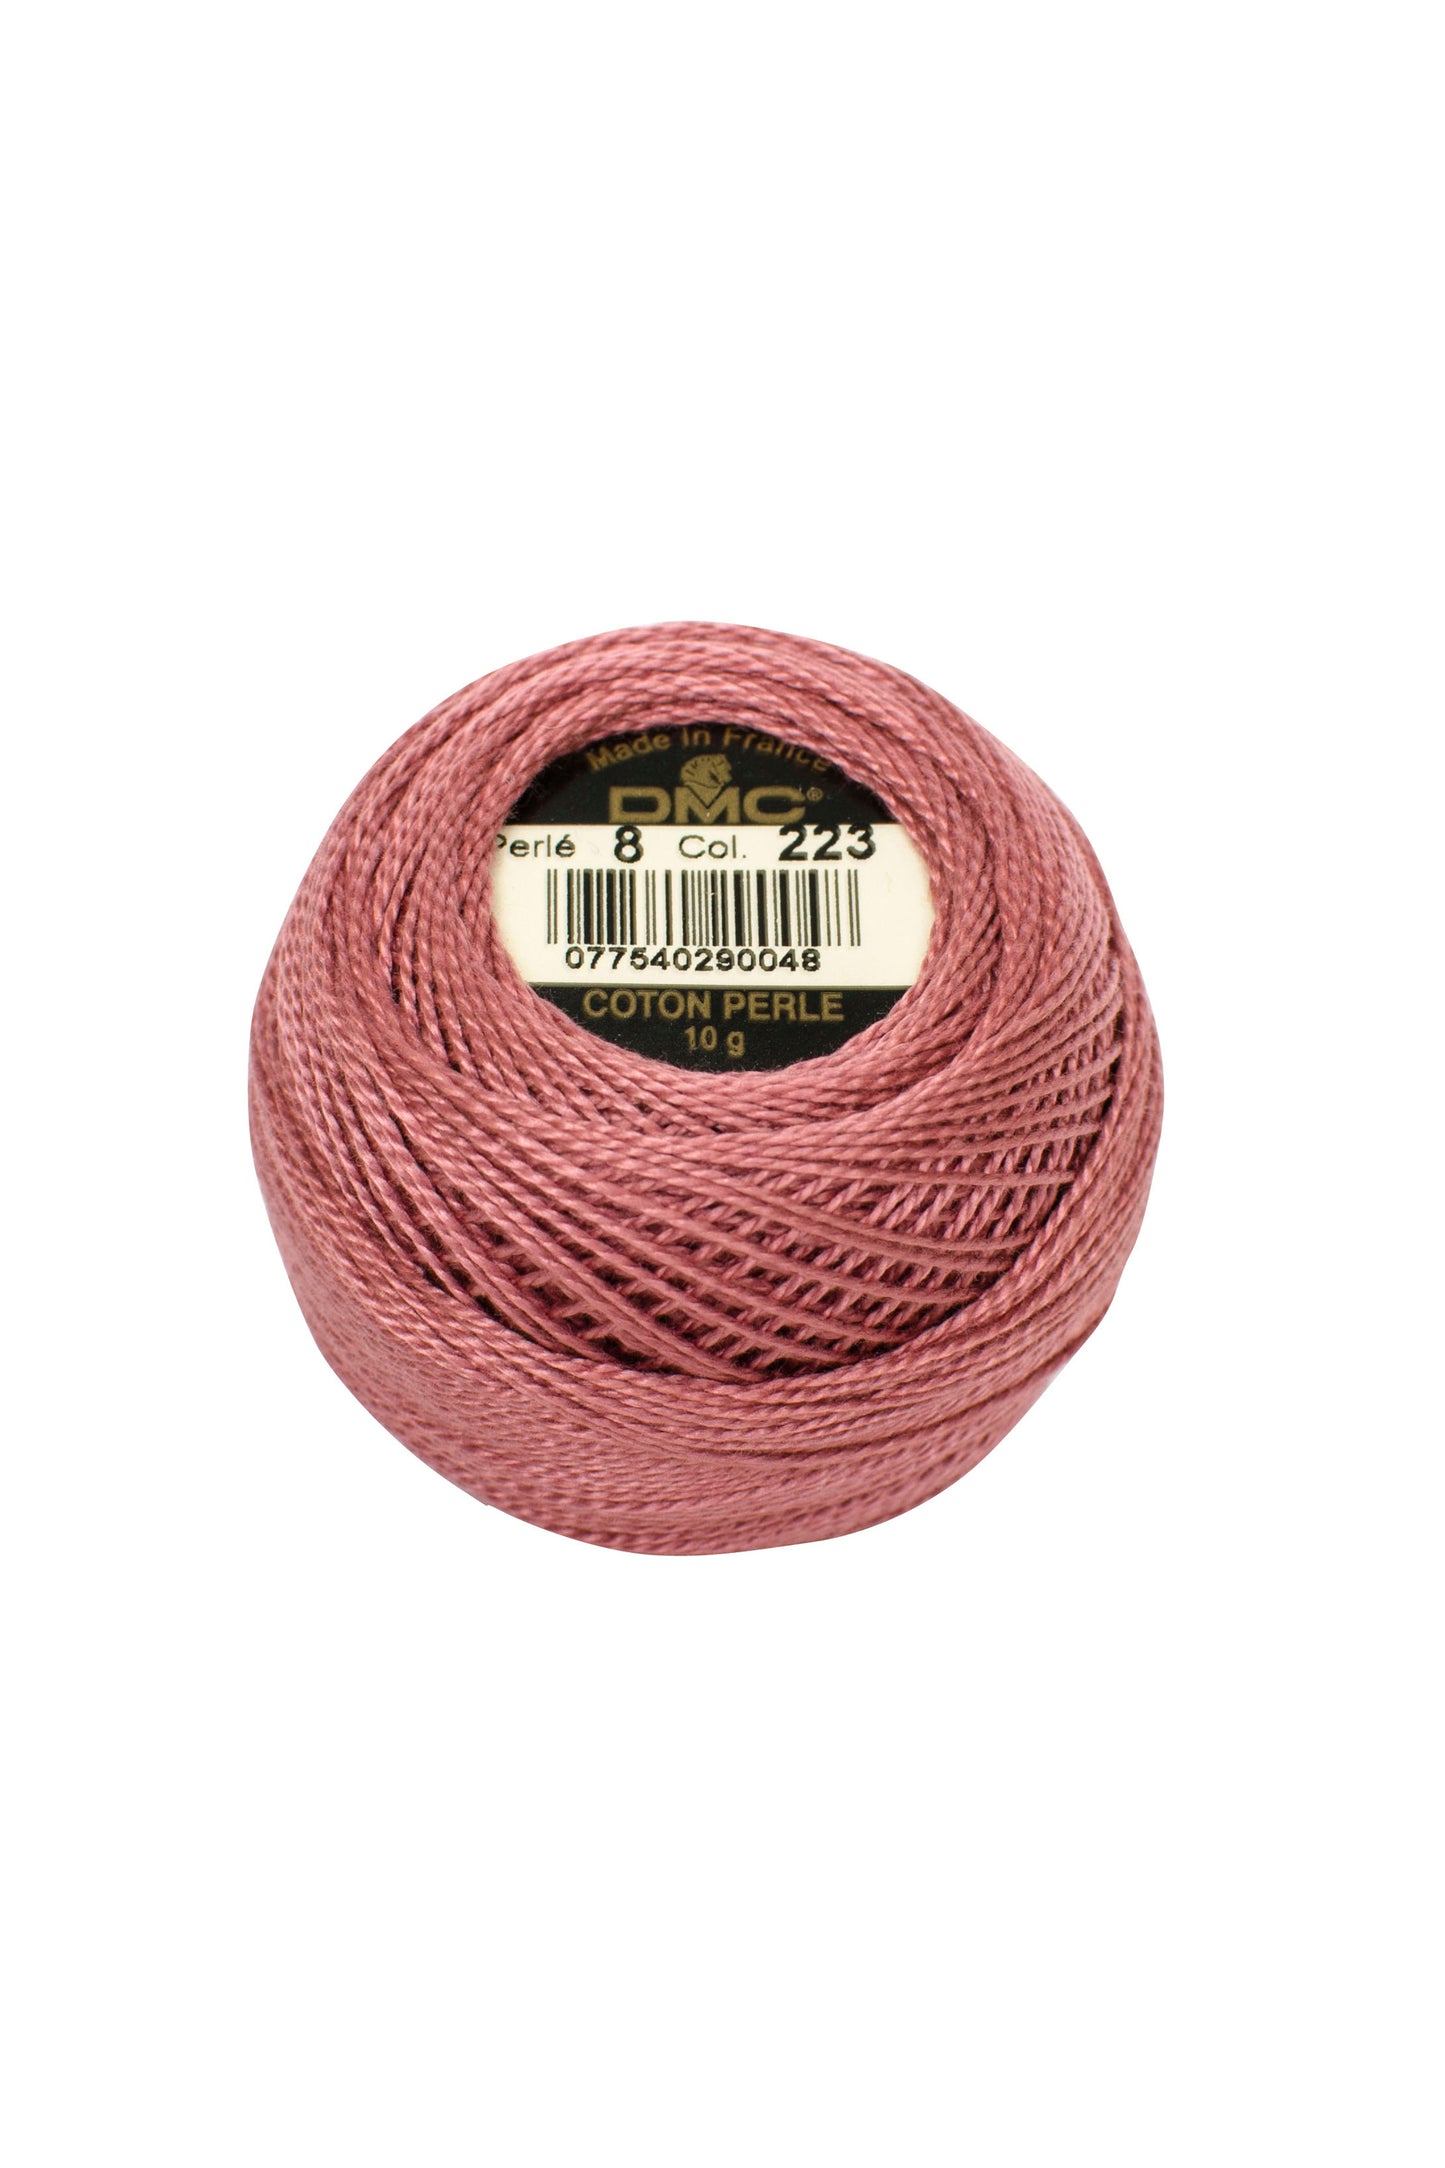 223 Light Shell Pink - DMC #8 Perle Cotton Ball